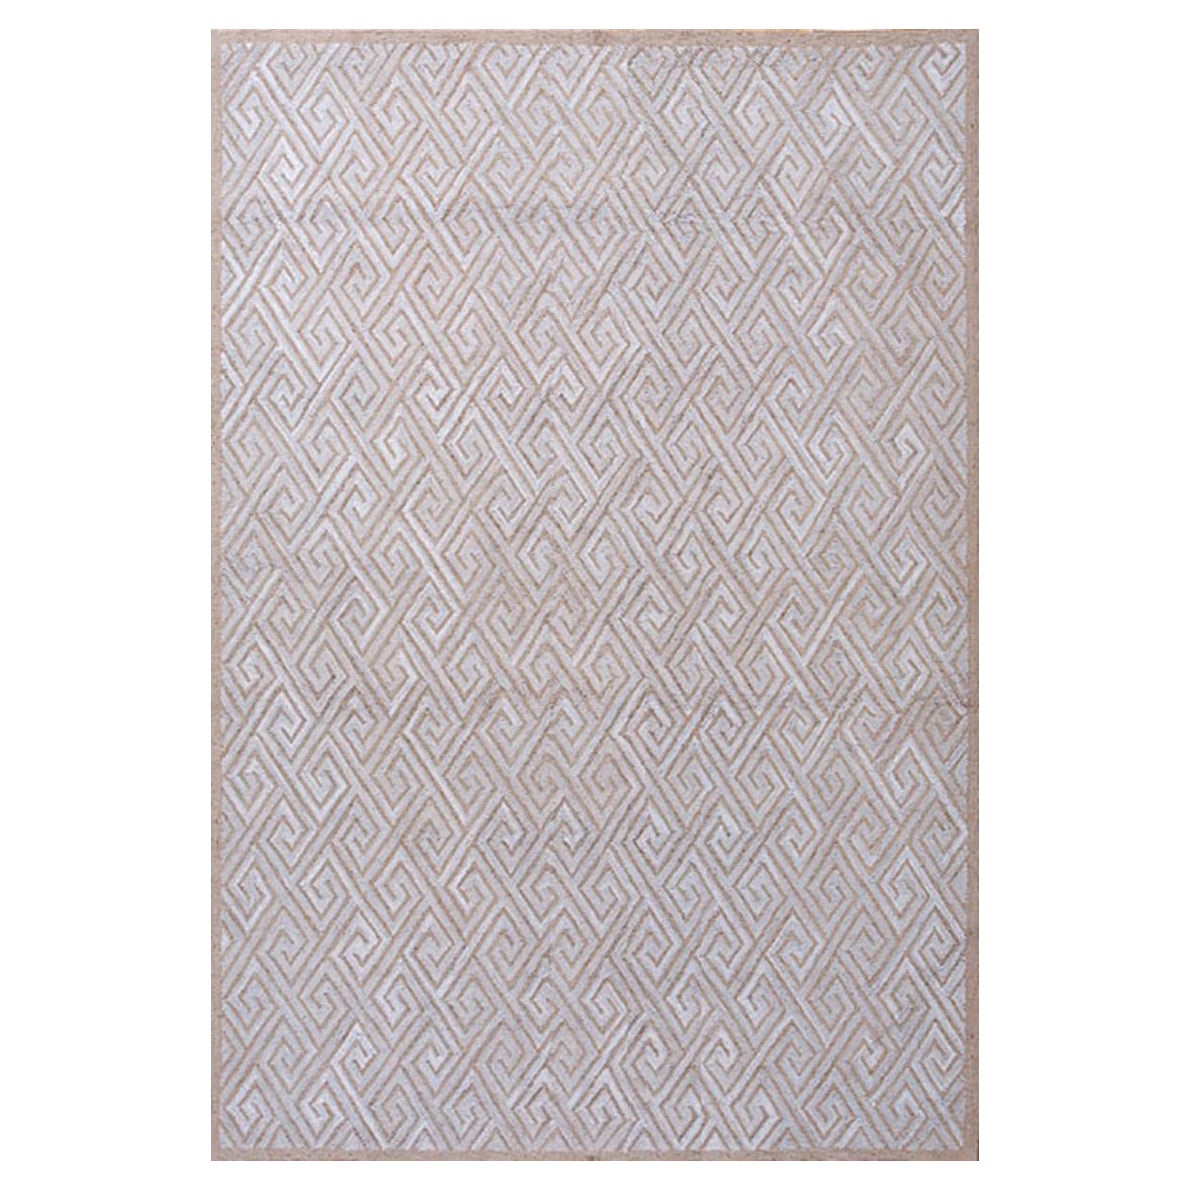 Contemporary Handmade Cotton Hooked Rug ( 6' x 9' - 183 x 274cm )